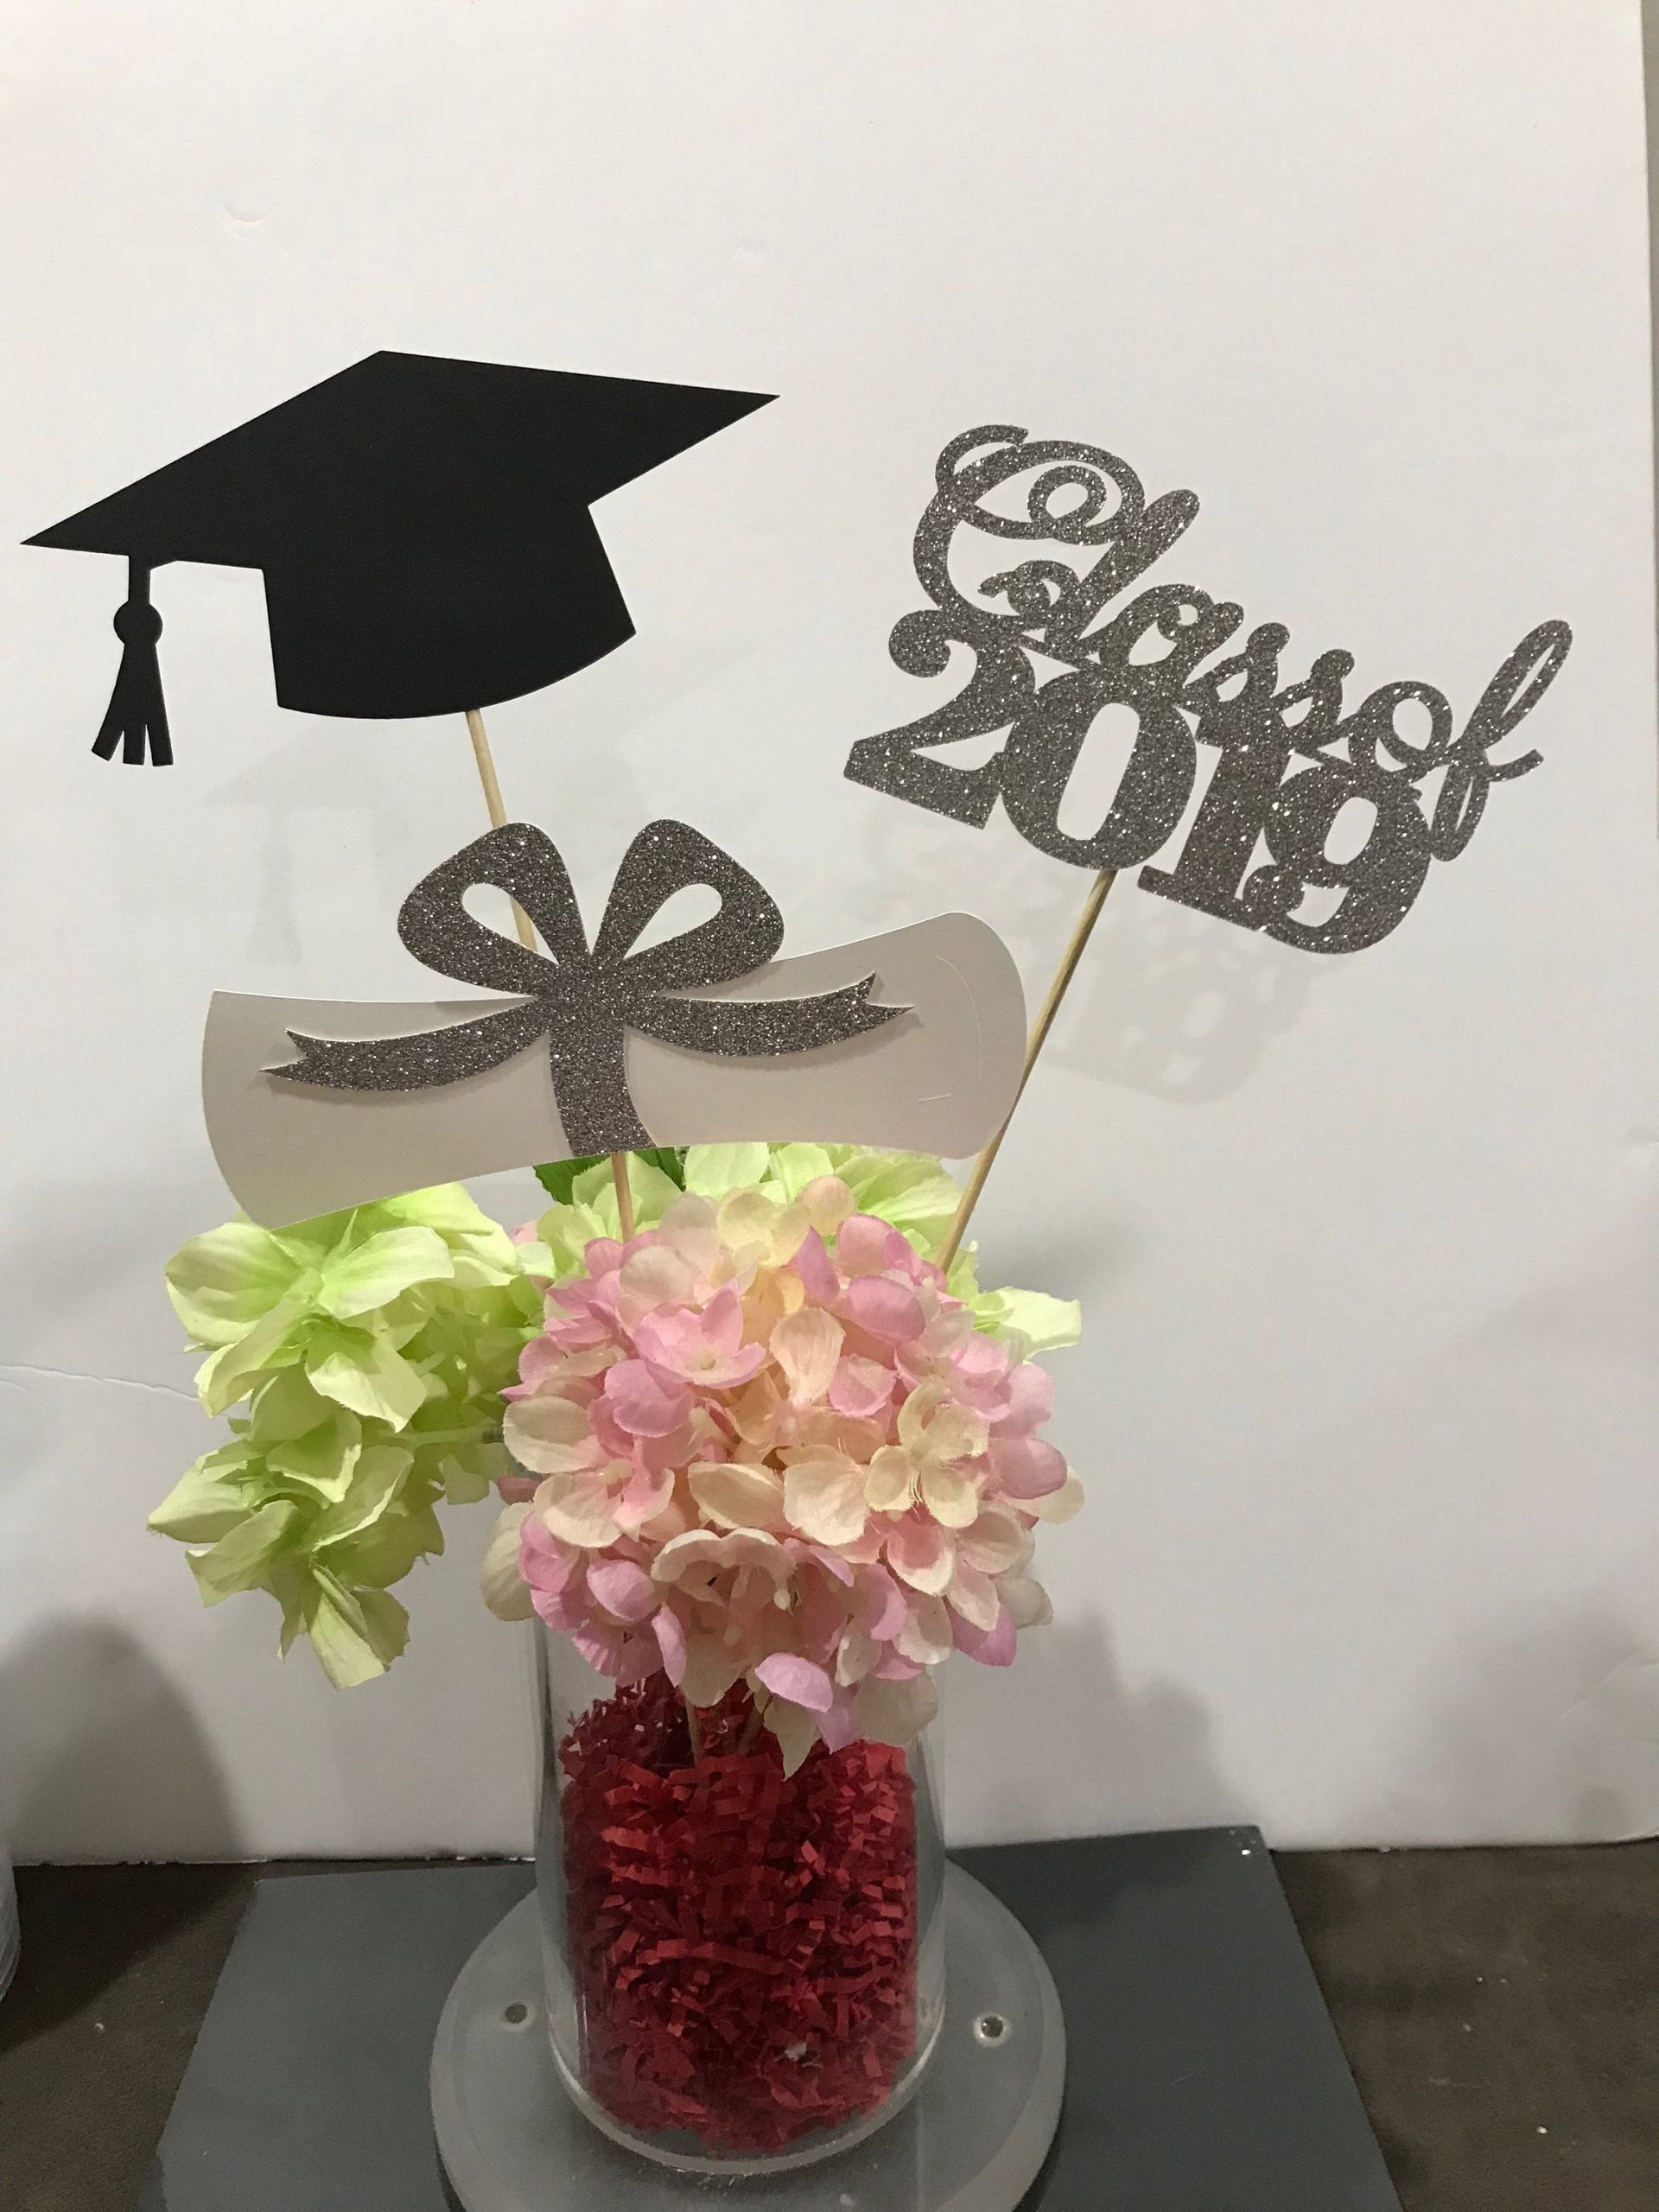 Formal Graduation Party Ideas
 Graduation party decorations 2020 Graduation Centerpiece